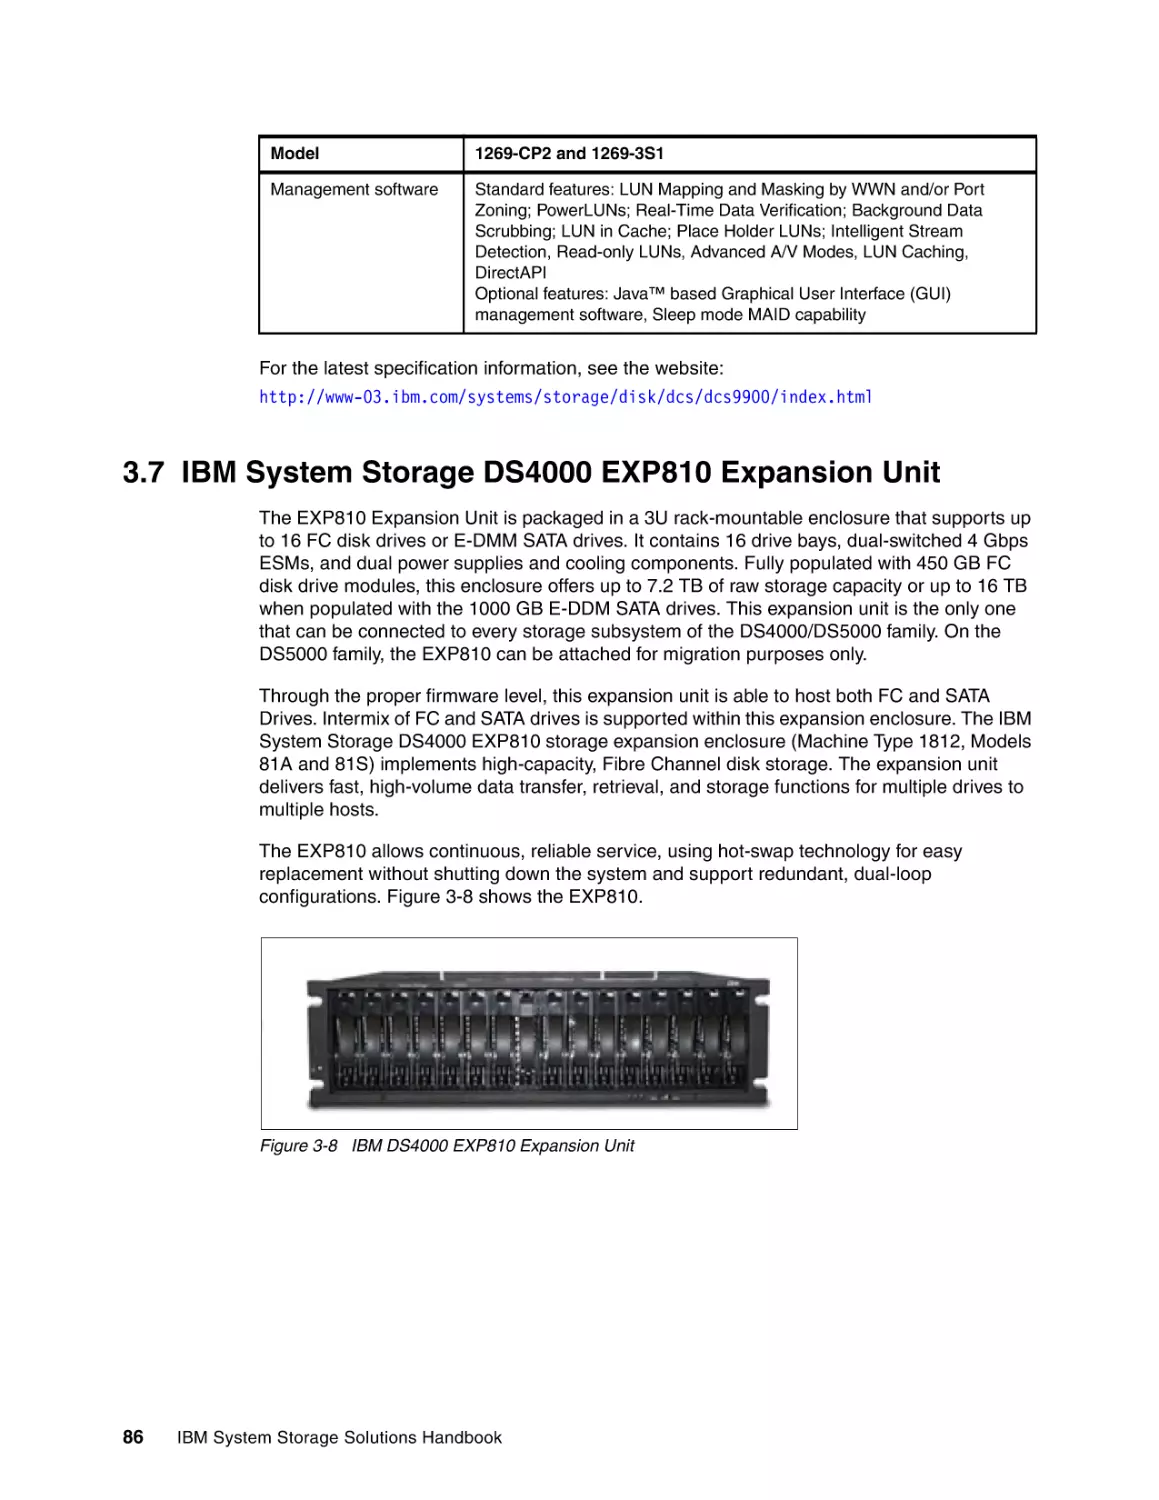 3.7 IBM System Storage DS4000 EXP810 Expansion Unit